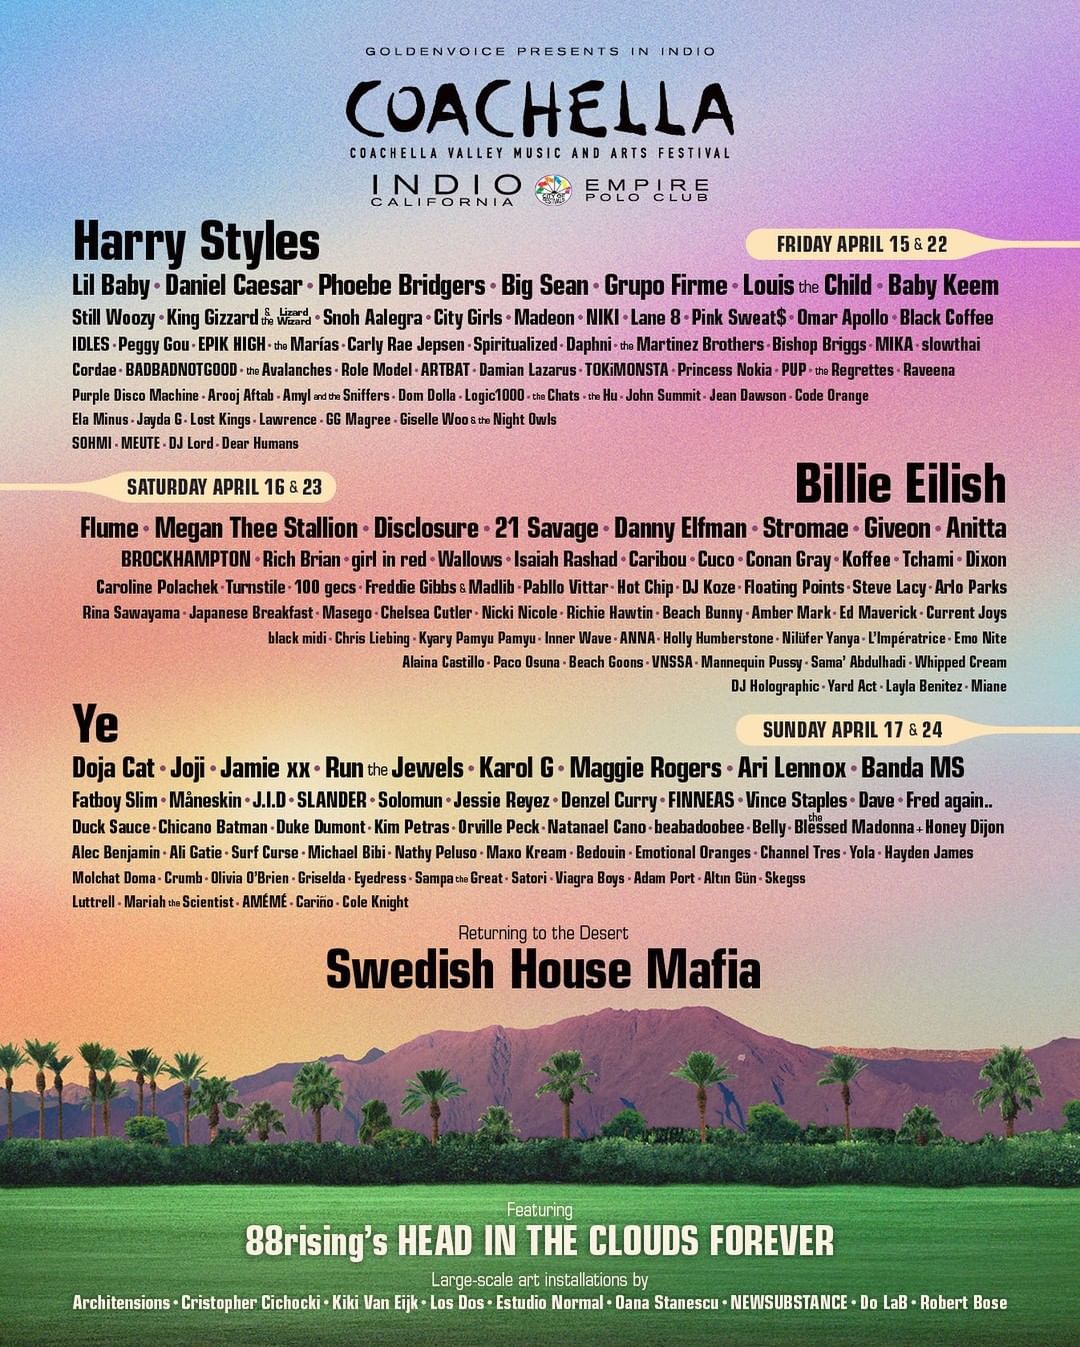 Coachella 2022 Billie Eilish, Harry Styles, and Ye are headliners